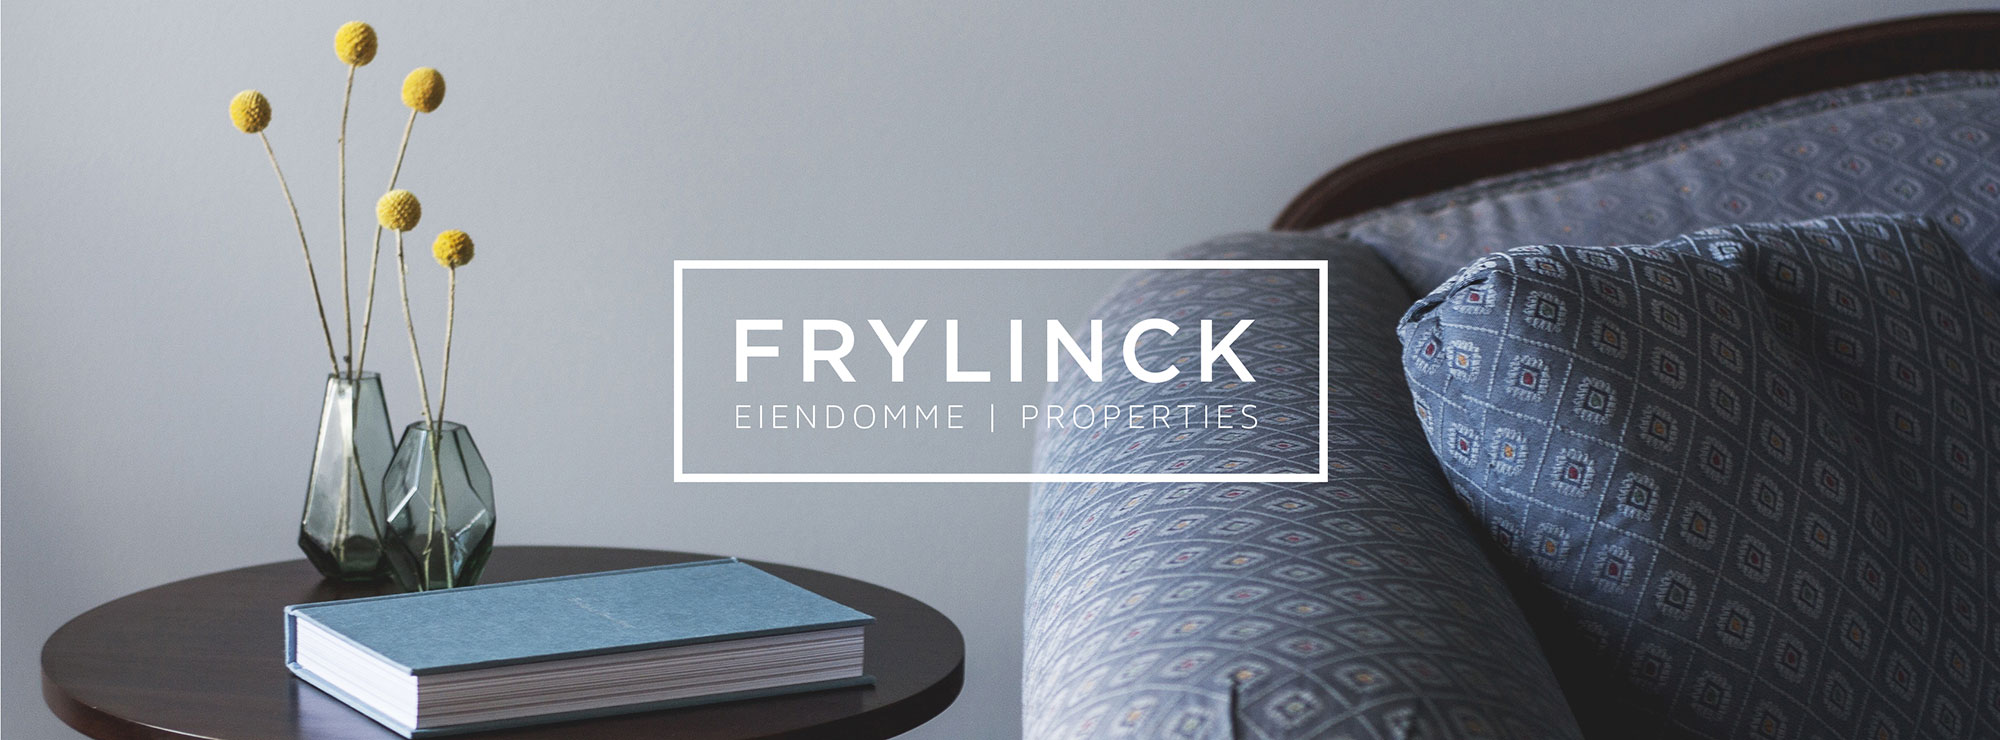 Frylinck Properties web development George